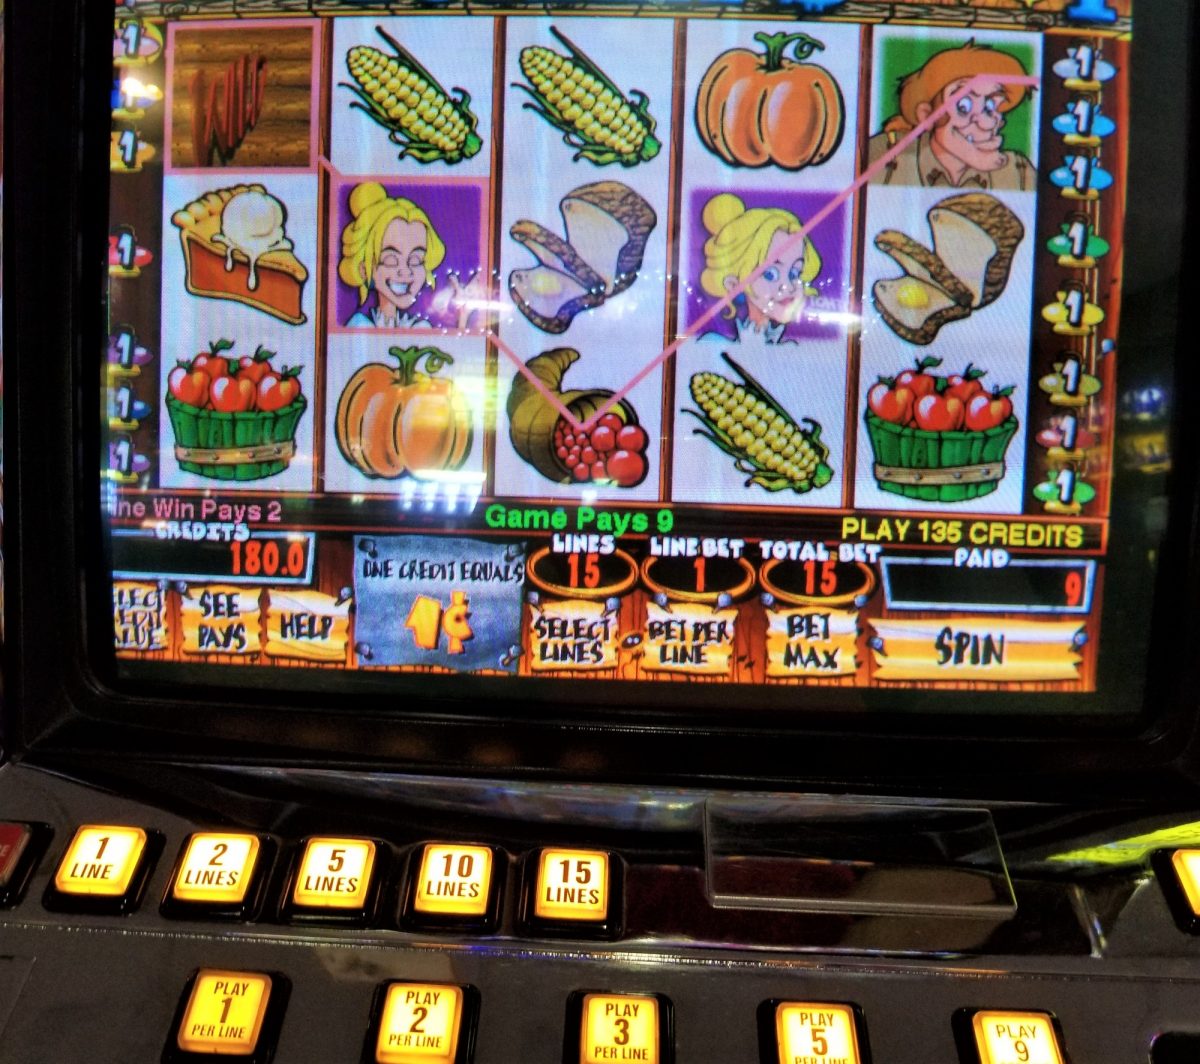 Slot Machines! Gambling!